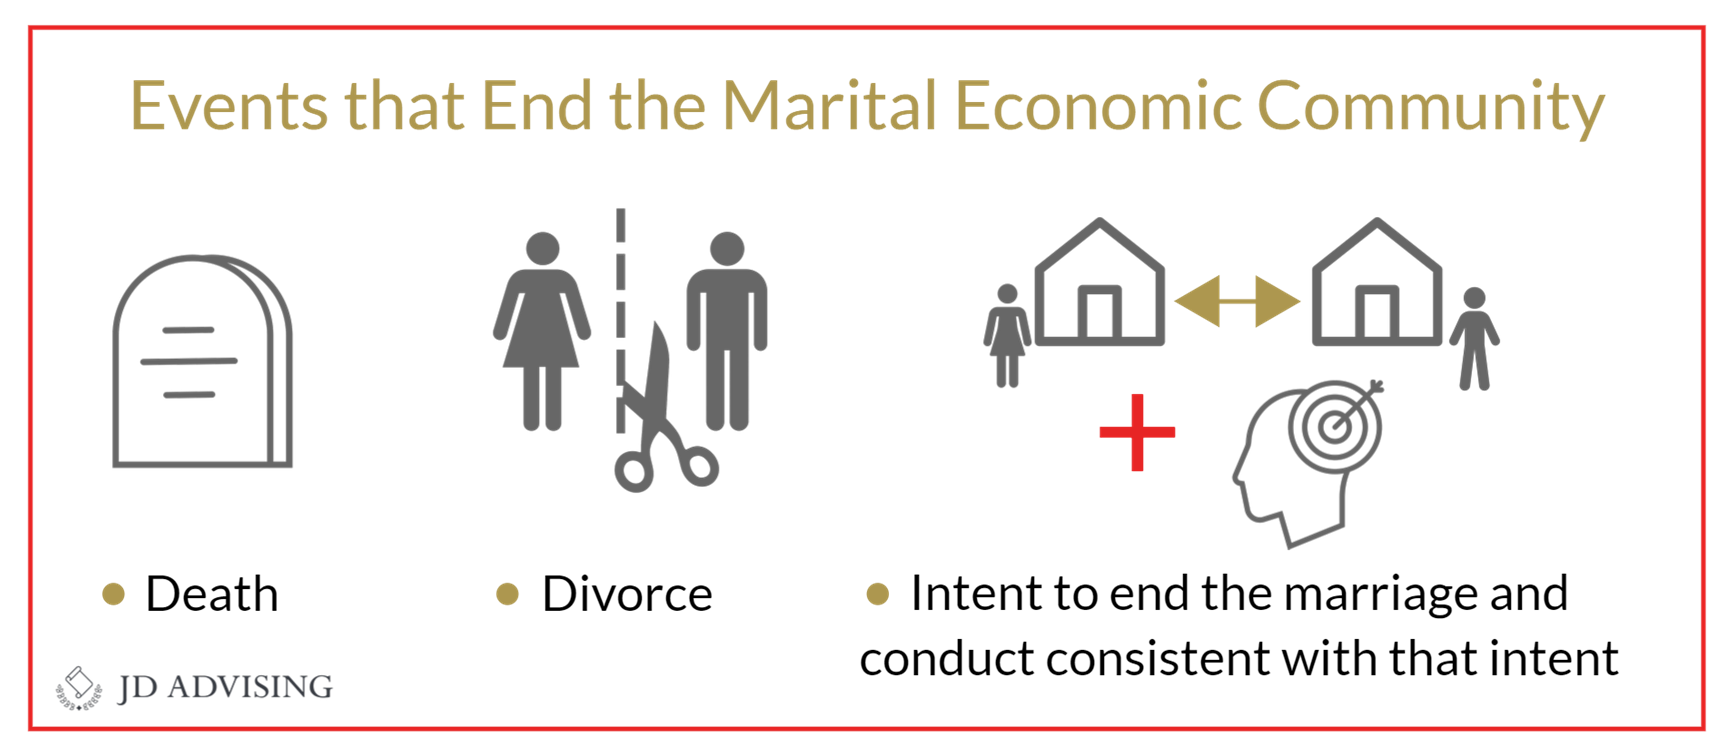 Events that End the Marital Economic Community